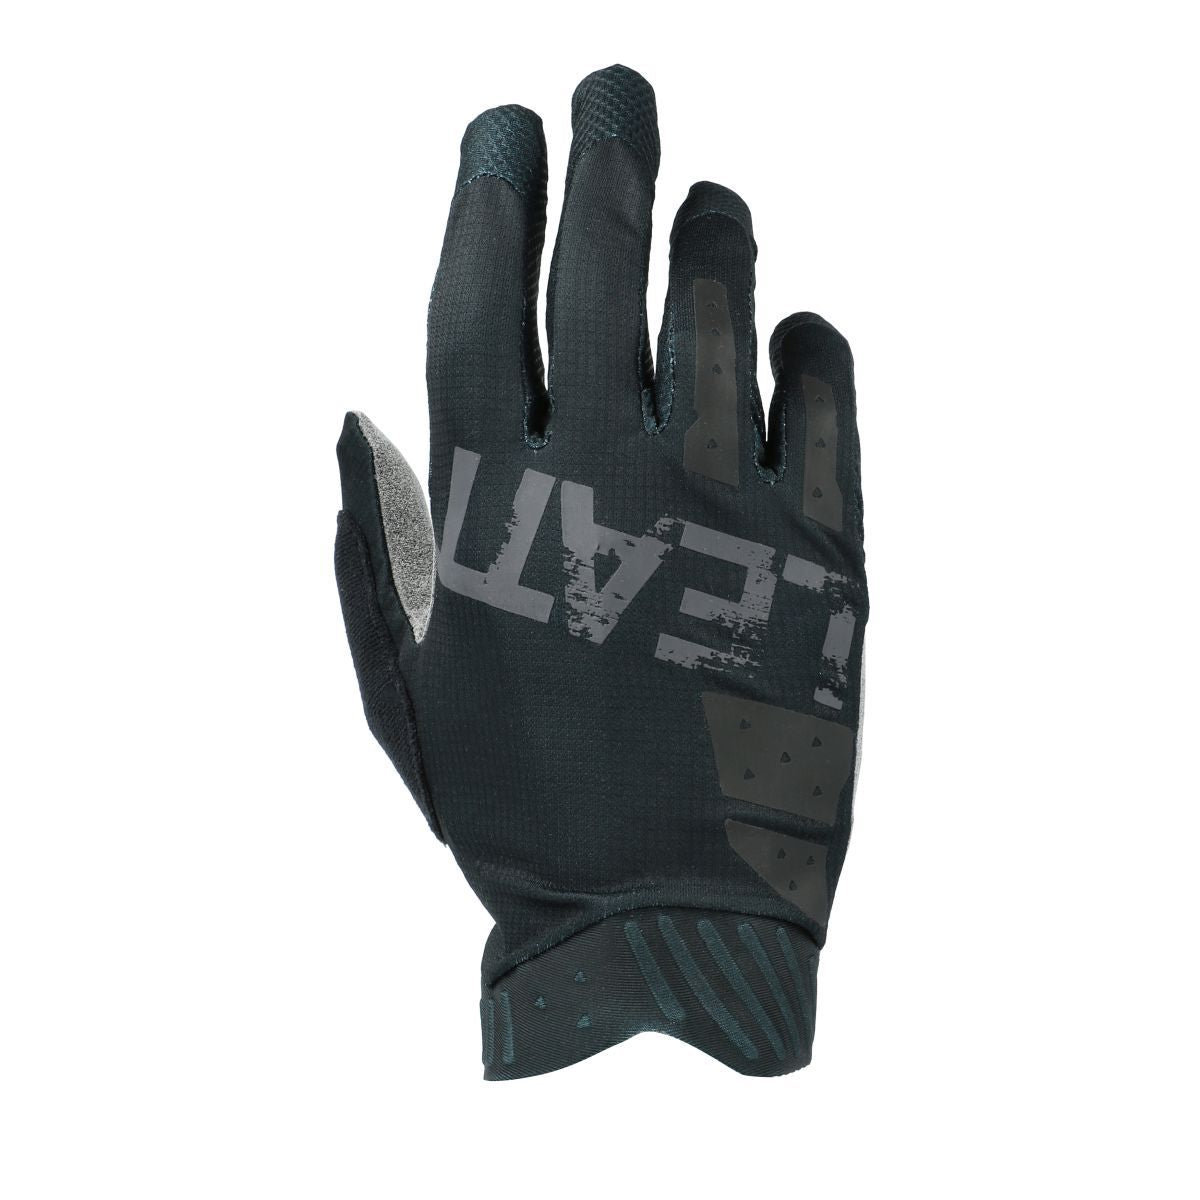 Leatt Protection Glove Mtb 1.0 Gripr Black Xl in Black